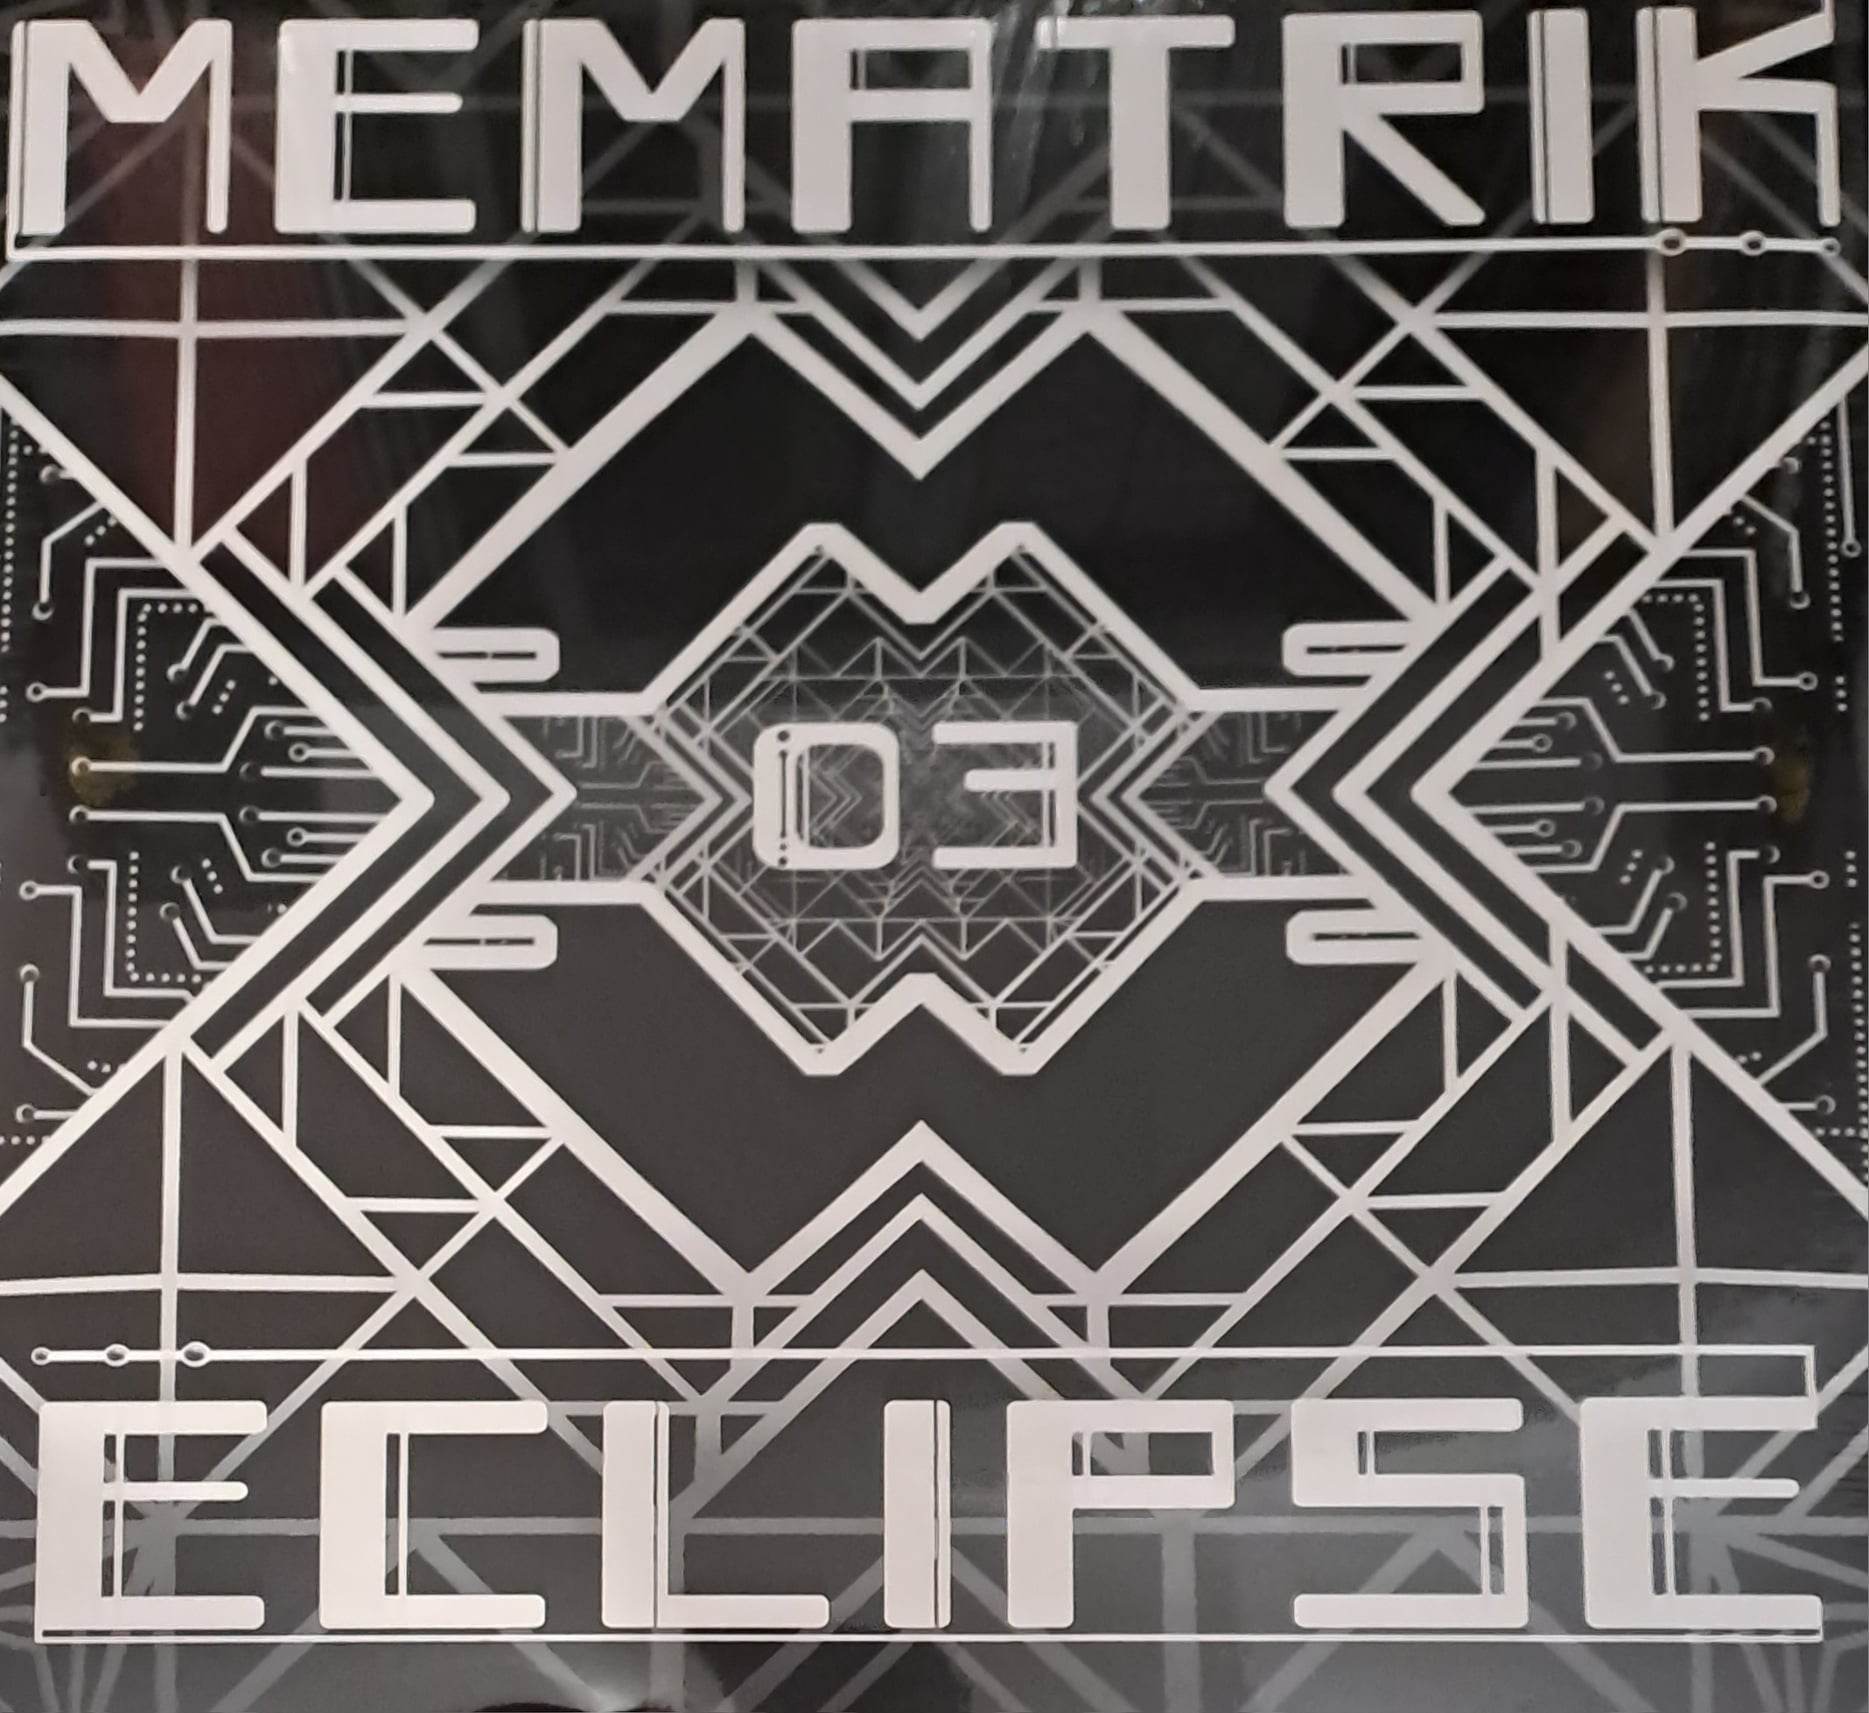 Mematrik 03 (double album) - vinyle freetekno